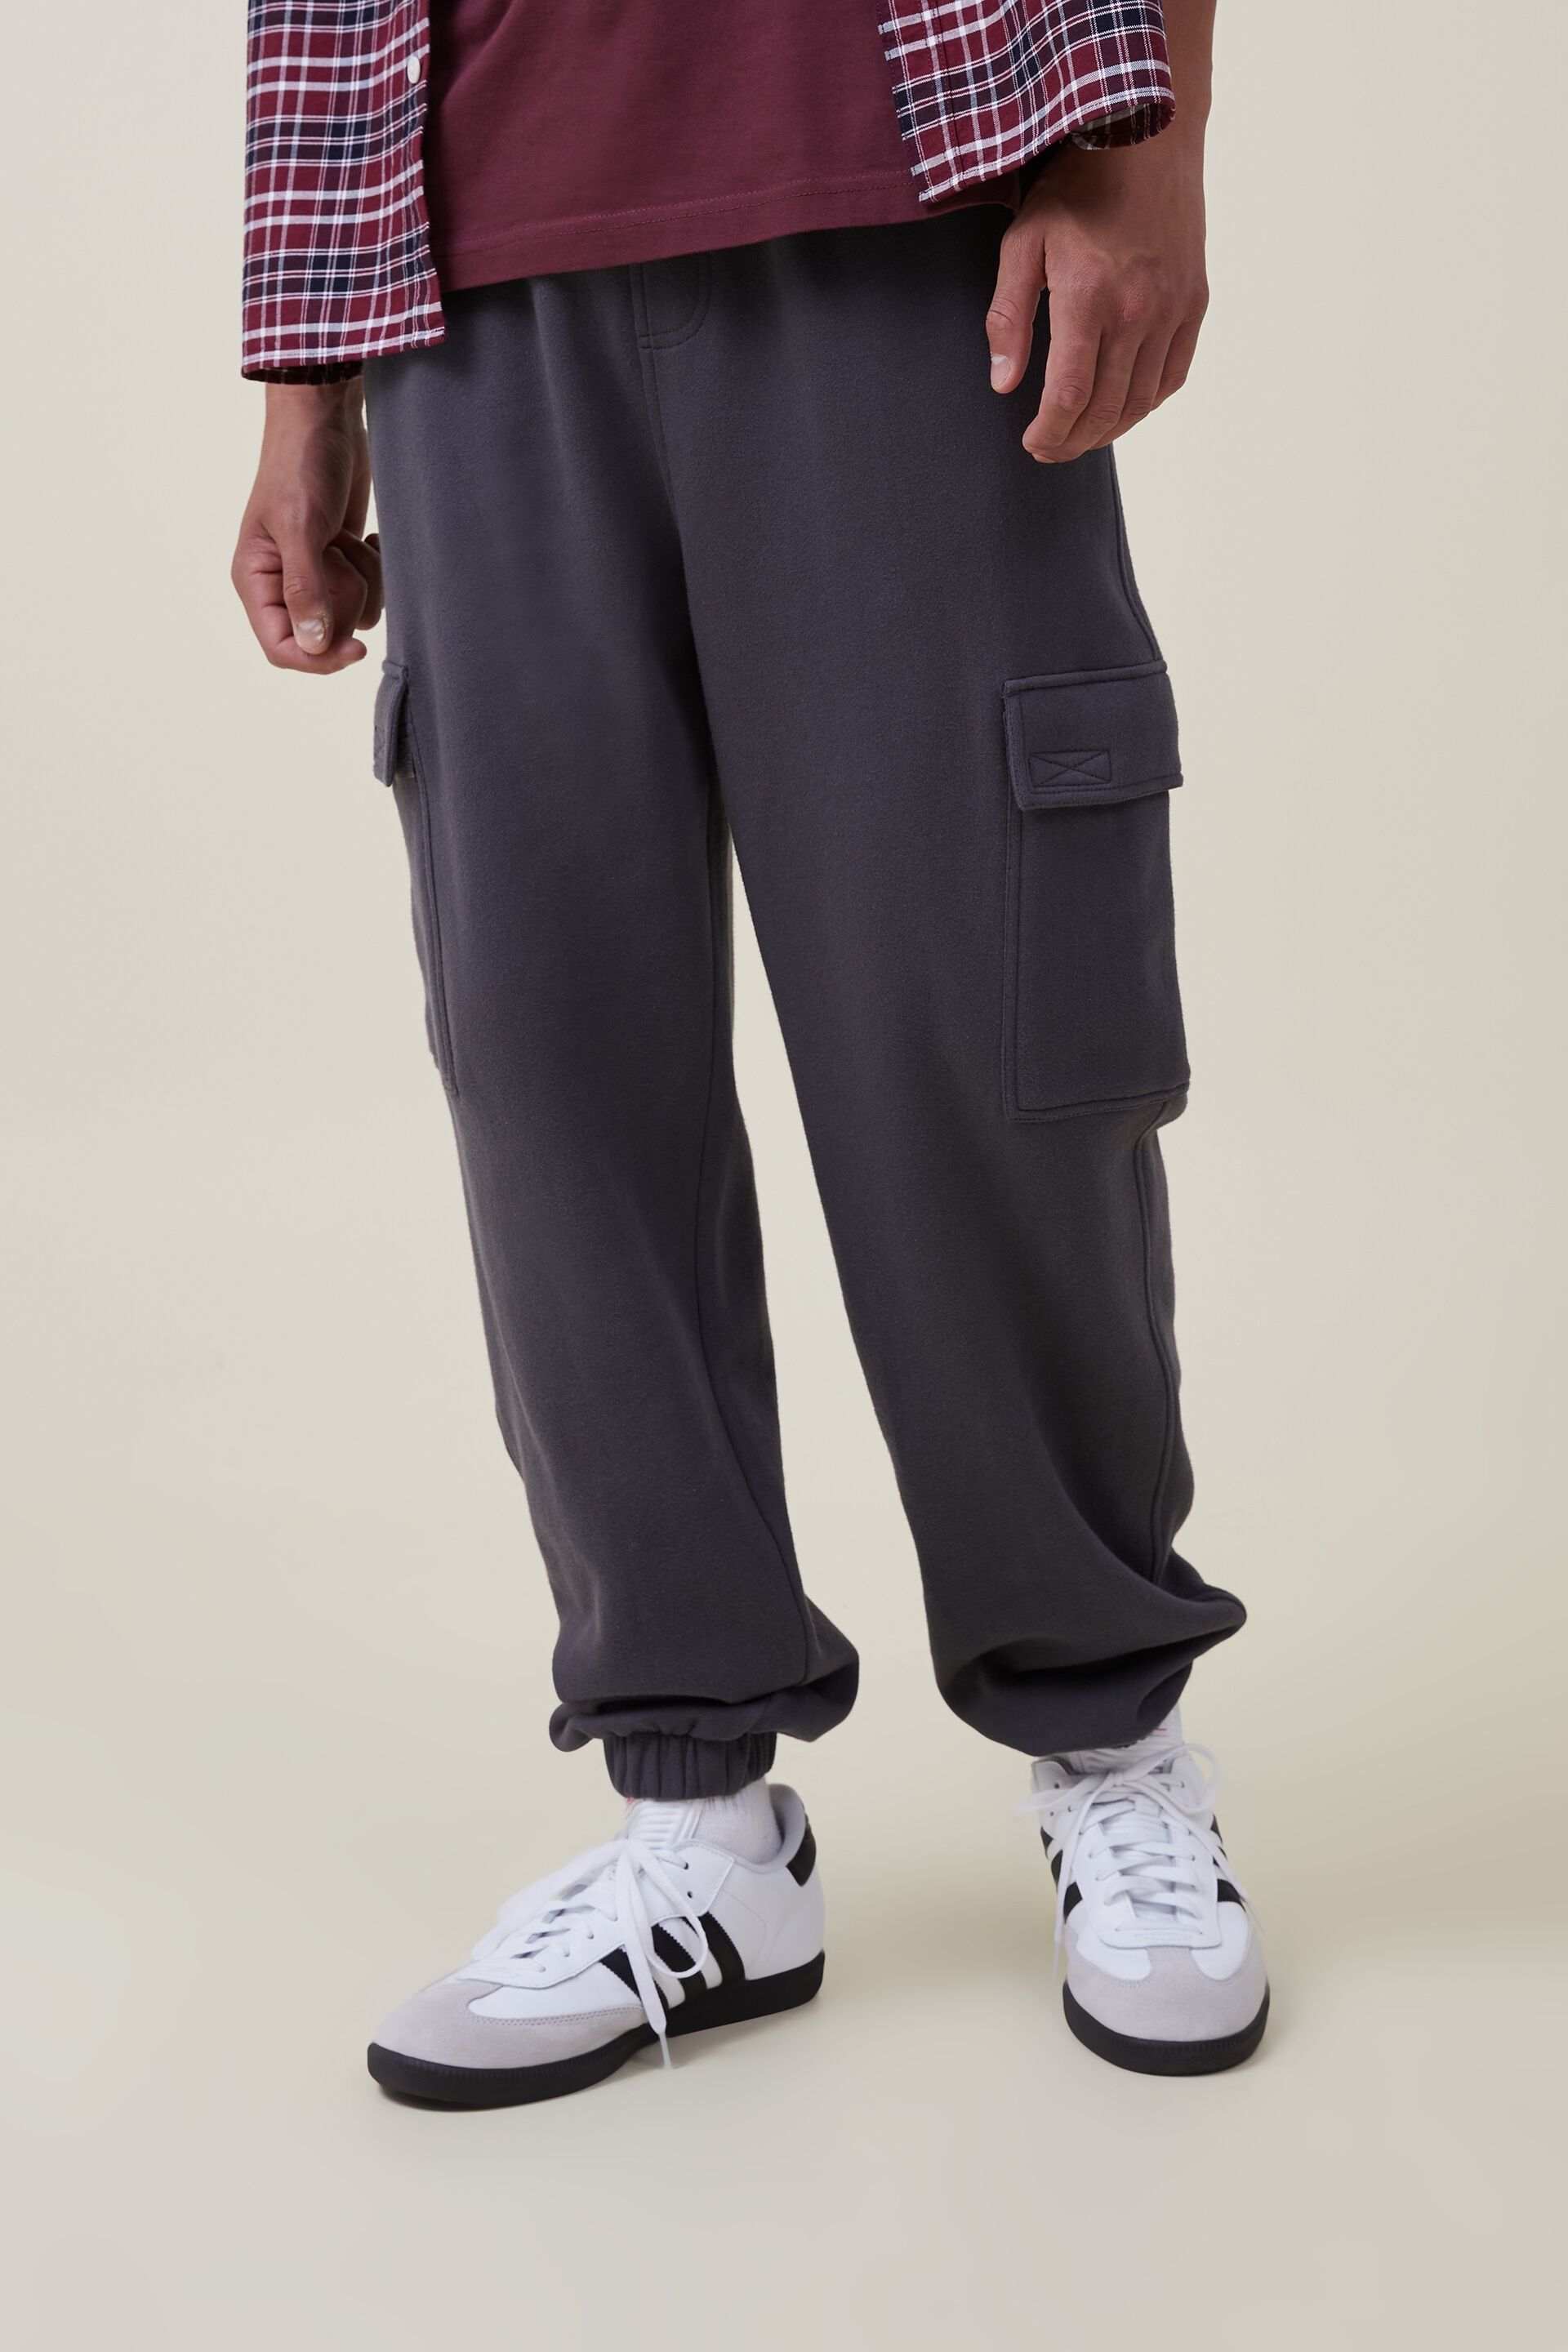 Buy Grey Track Pants for Men by Styli Online | Ajio.com